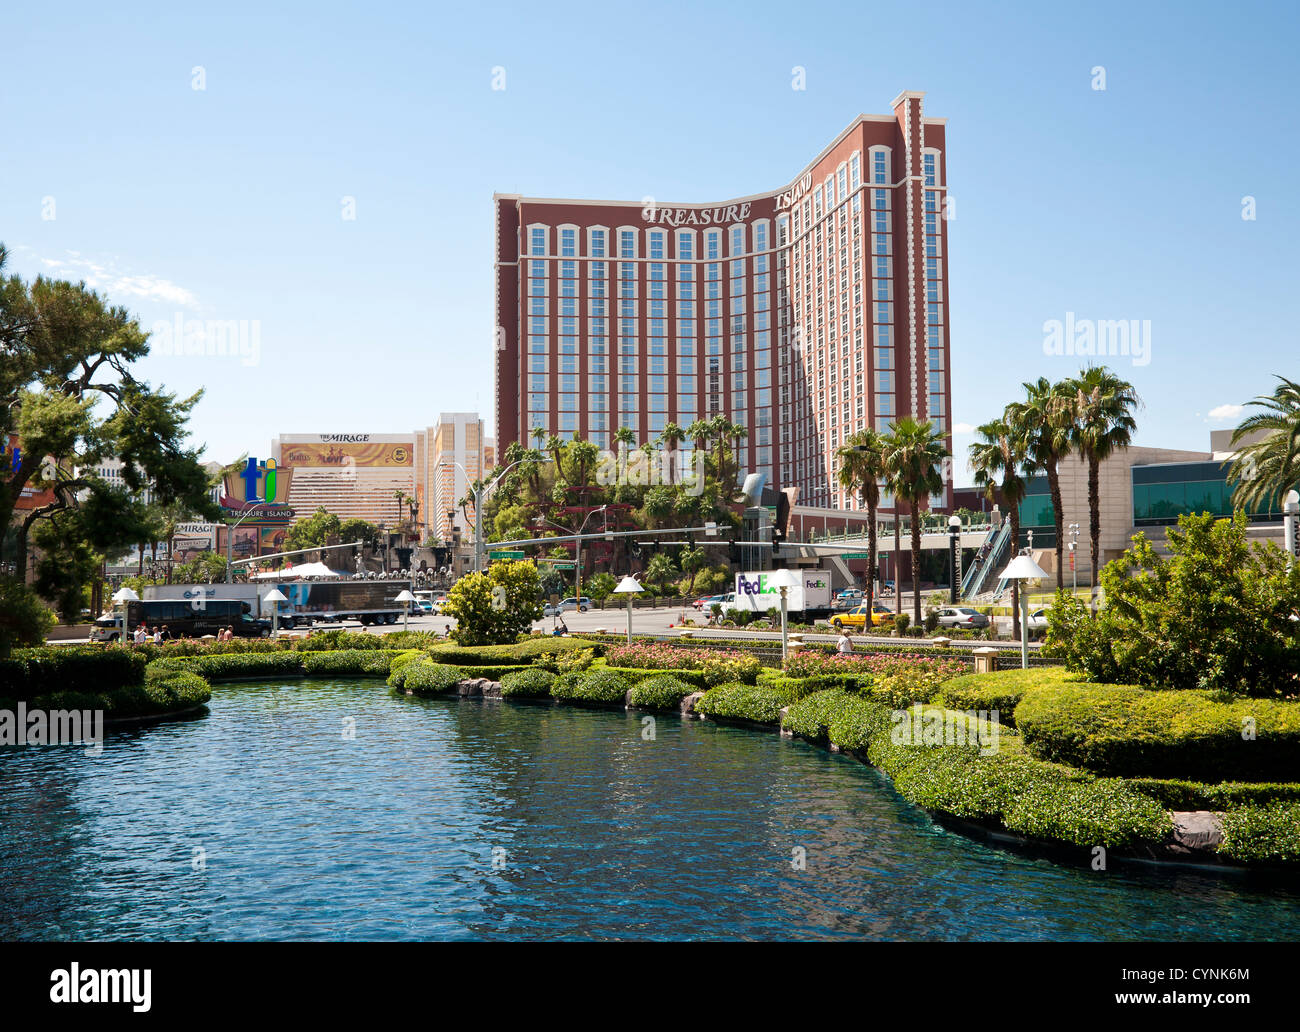 Treasure Island Hotel, Vegas Stock Photo